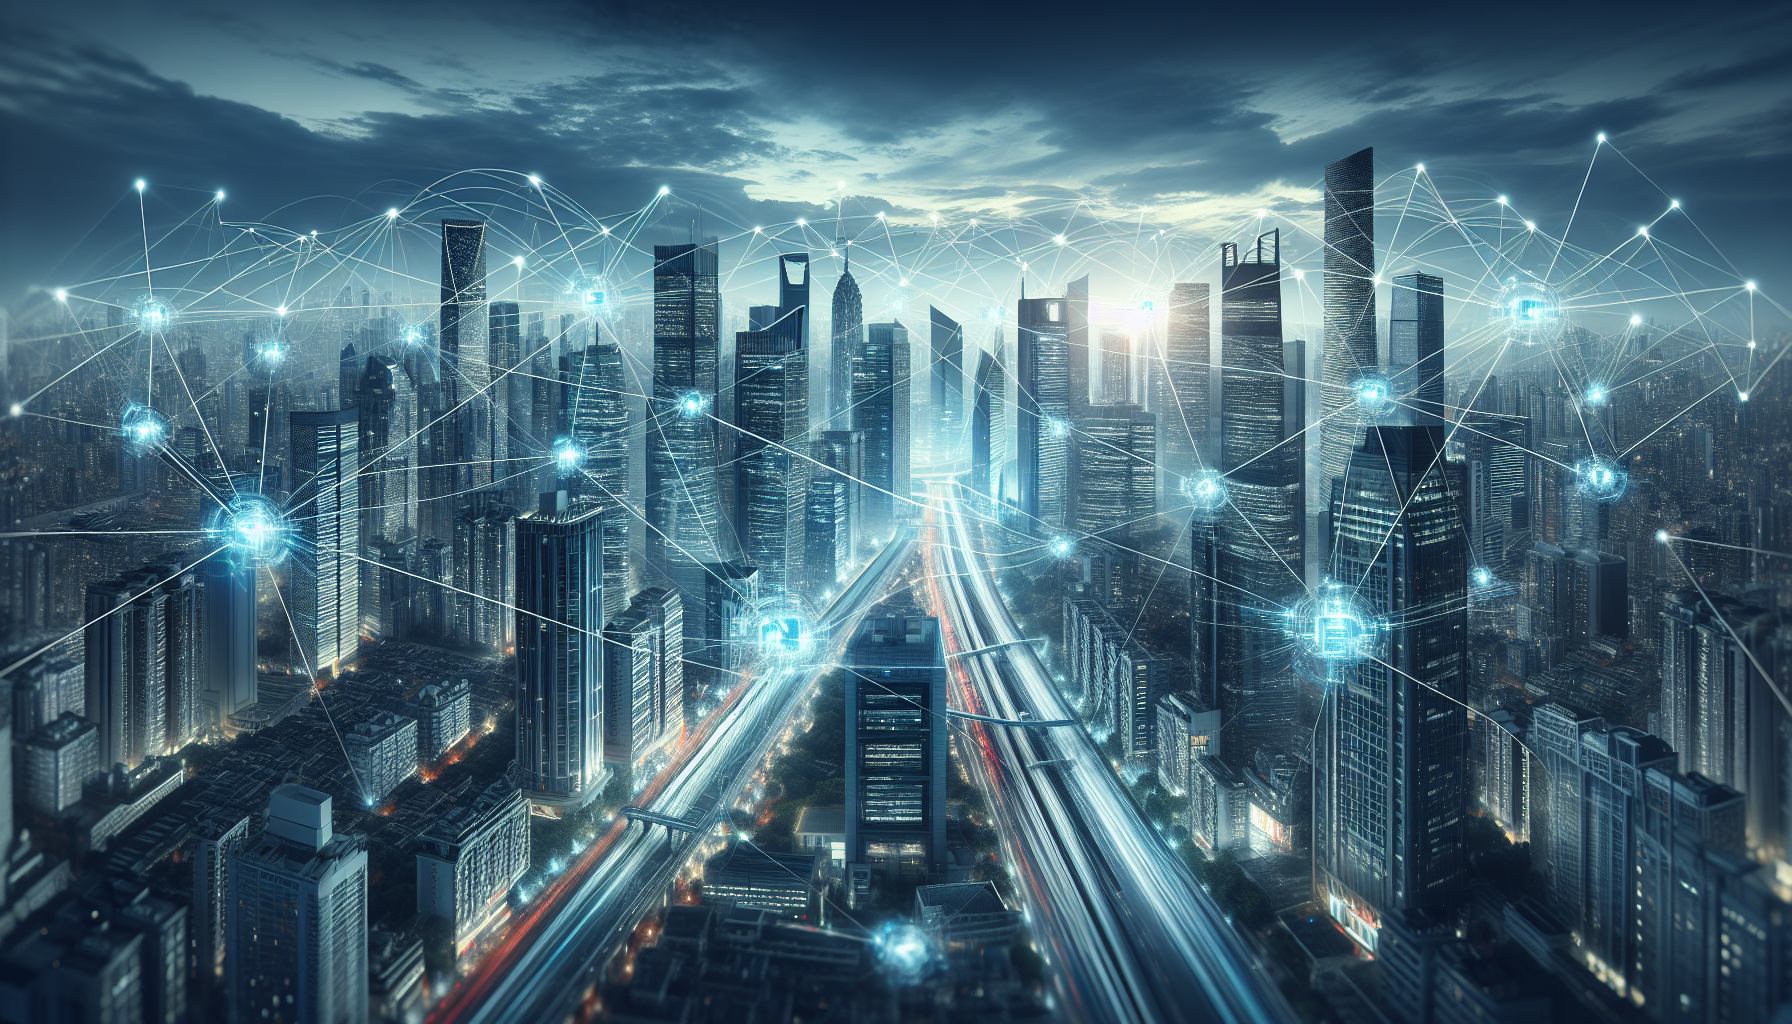 Illustration of SD-WAN technology revolutionizing network infrastructure